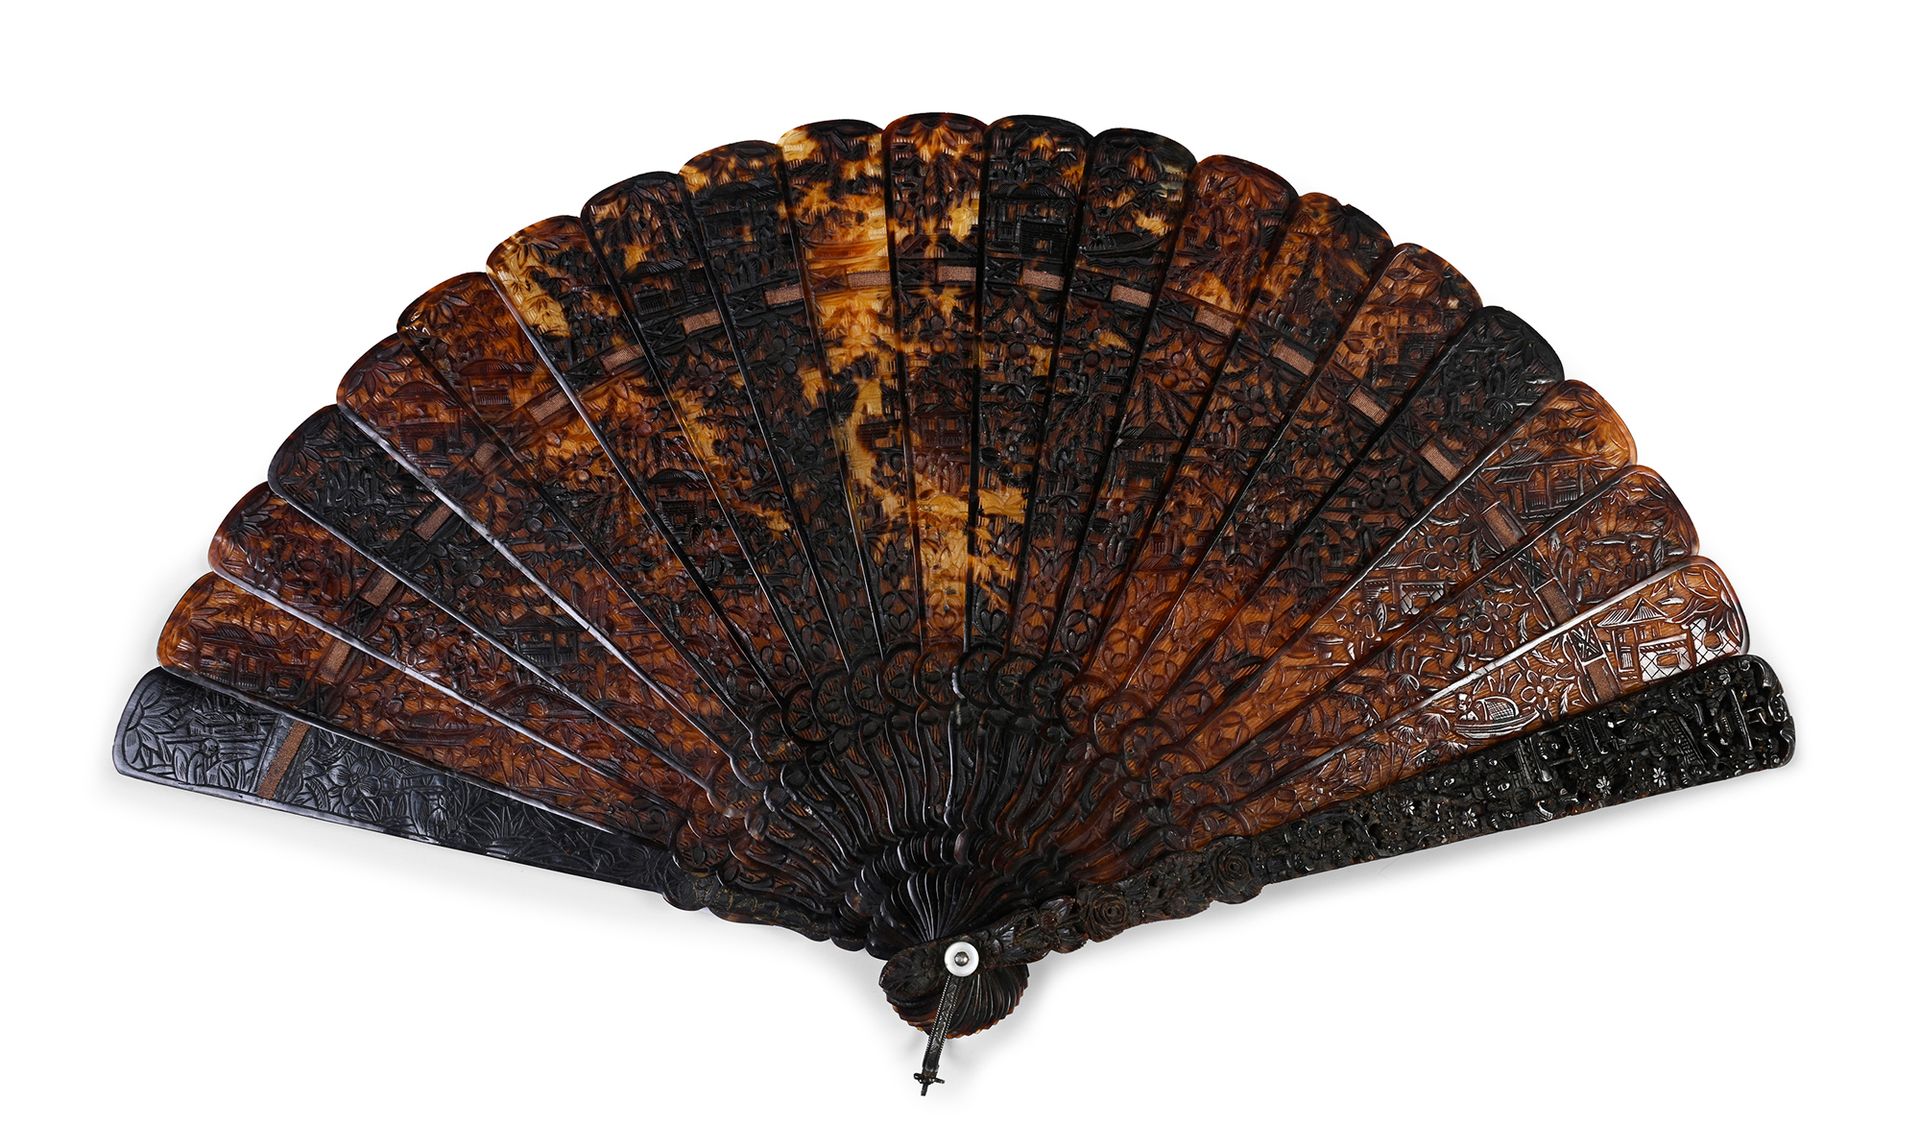 Null Brown tortoiseshell, China, 19th century
Brown tortoiseshell fan engraved o&hellip;